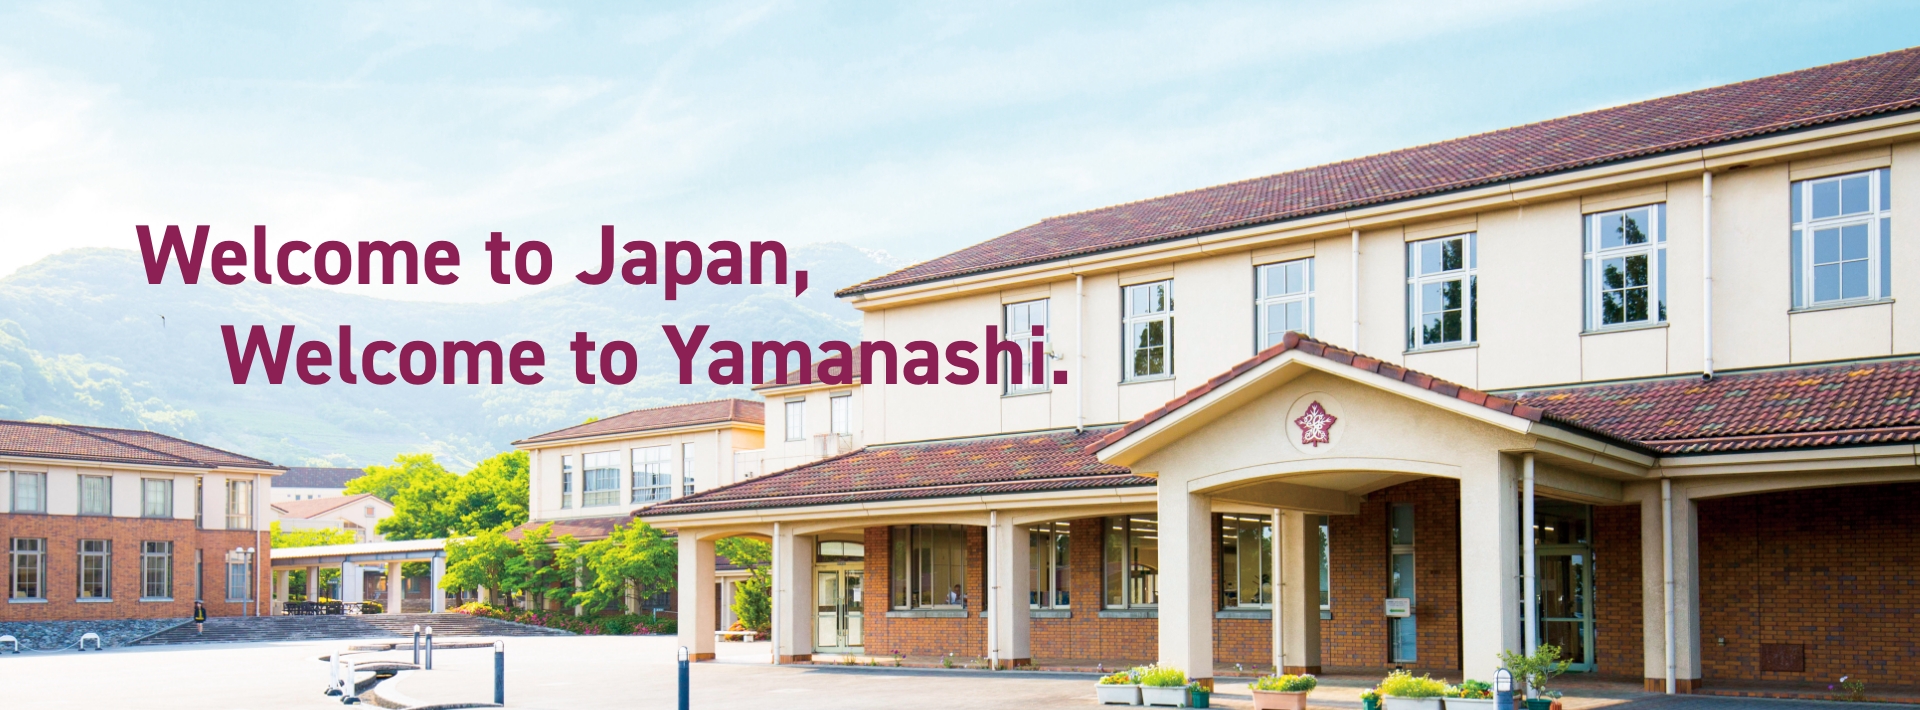 Welcome to Japan, Welcome to Yamanashi.